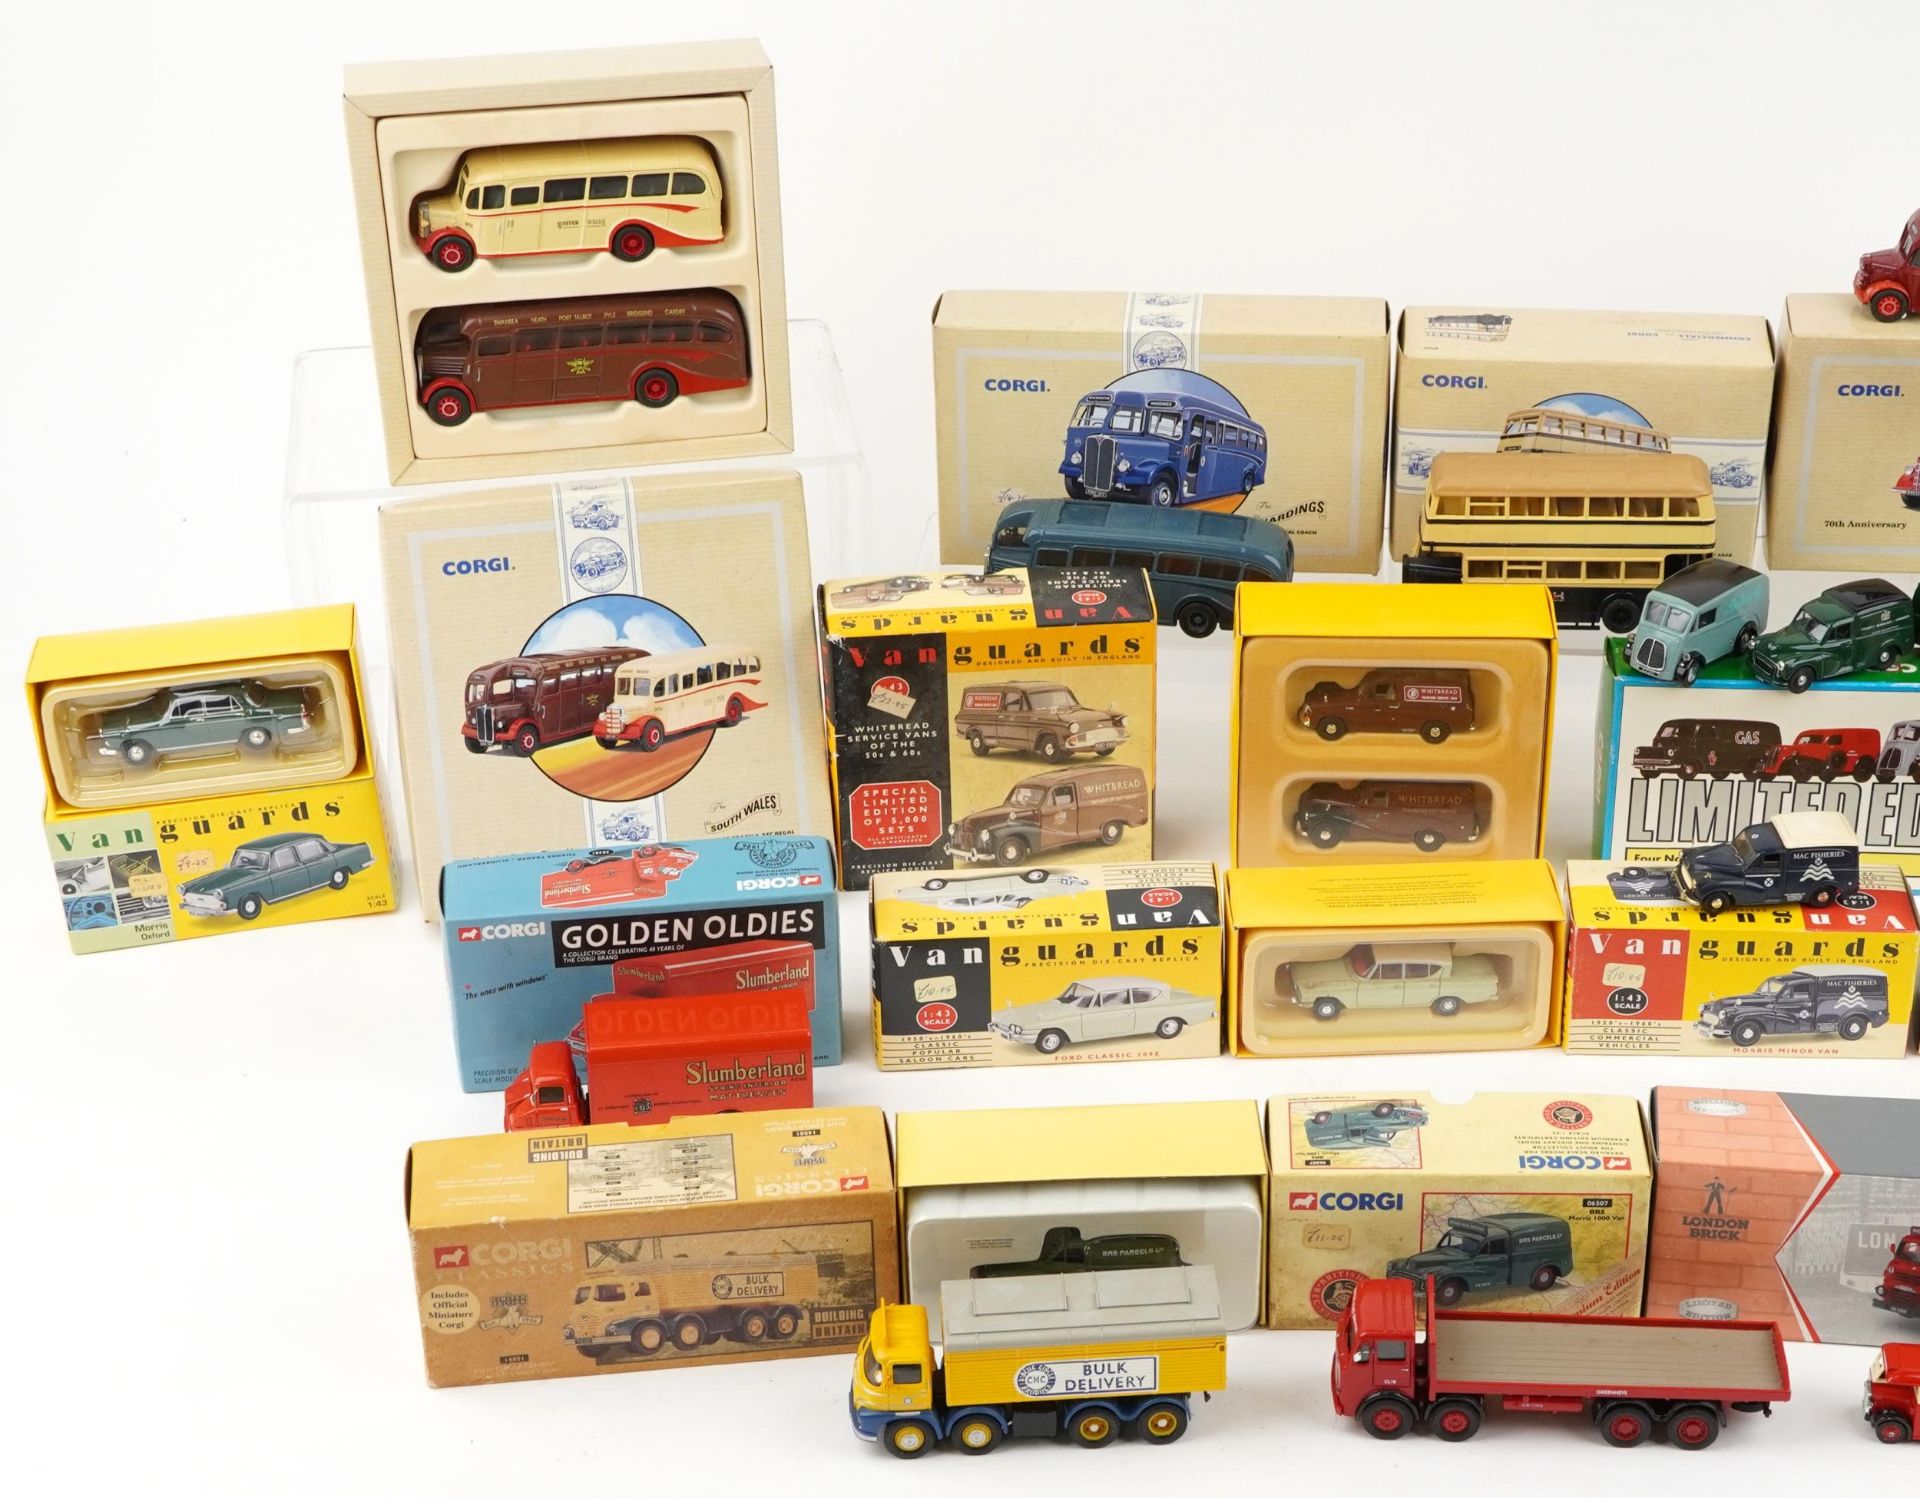 Diecast model vehicles with boxes including Corgi London Brick, Corgi Buses and Vanguards - Image 2 of 3